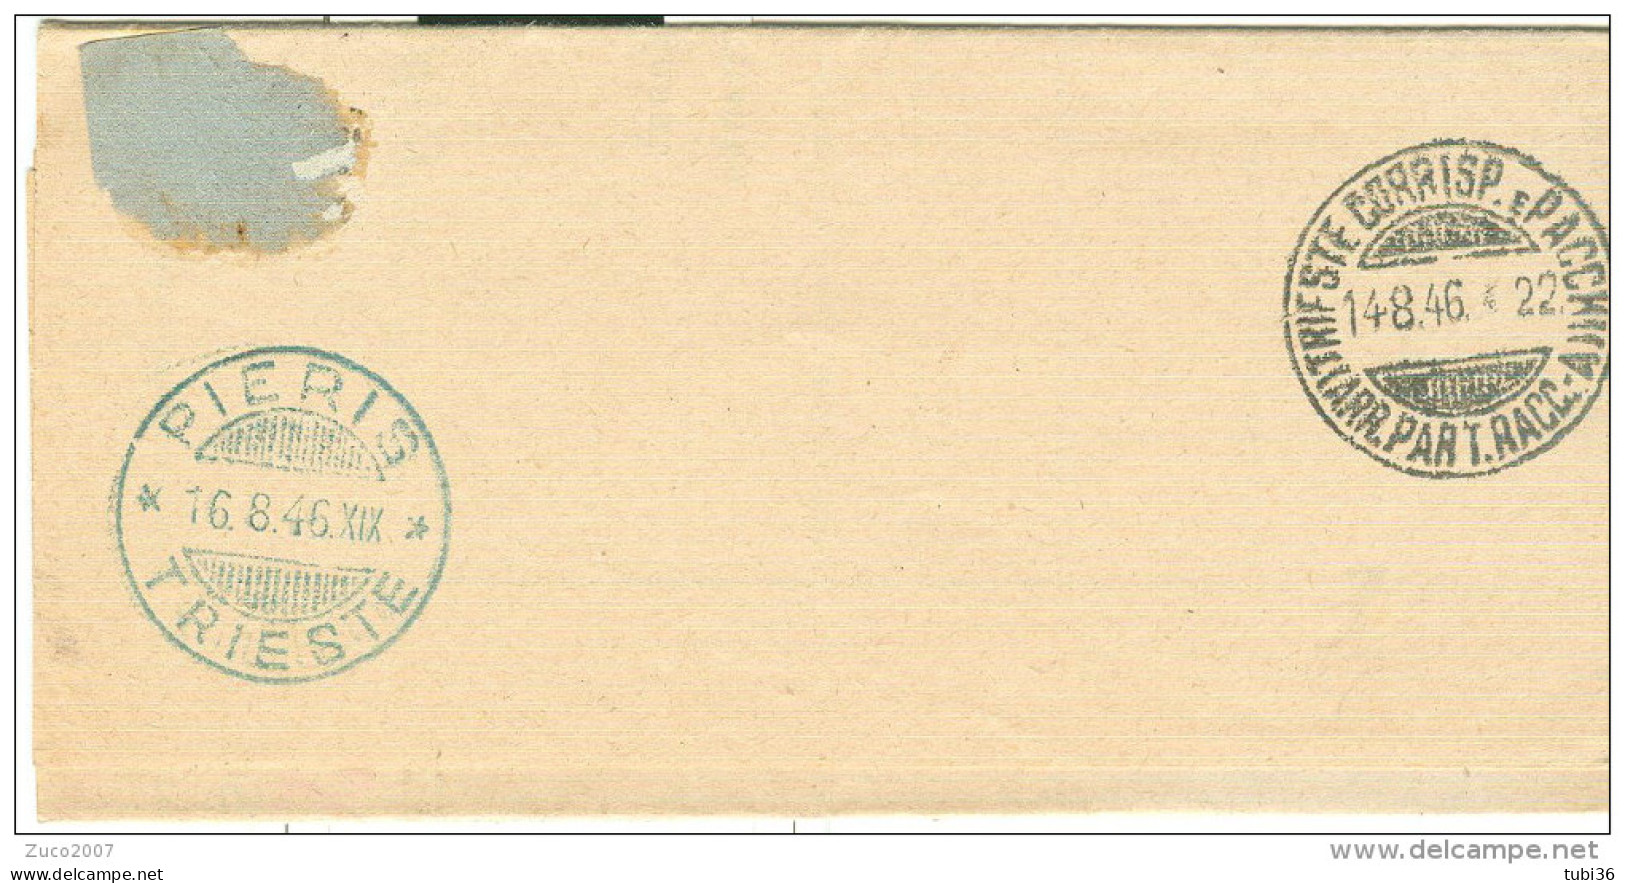 AMG-VG, IMP. £.10,VARIETA SOPRASTAMPA SPOSTATA ISOLATO IN TARIFFA MANO. RACC., 1946, POSTE MONFALCONE -PIERIS, TRIESTE - Marcofilía